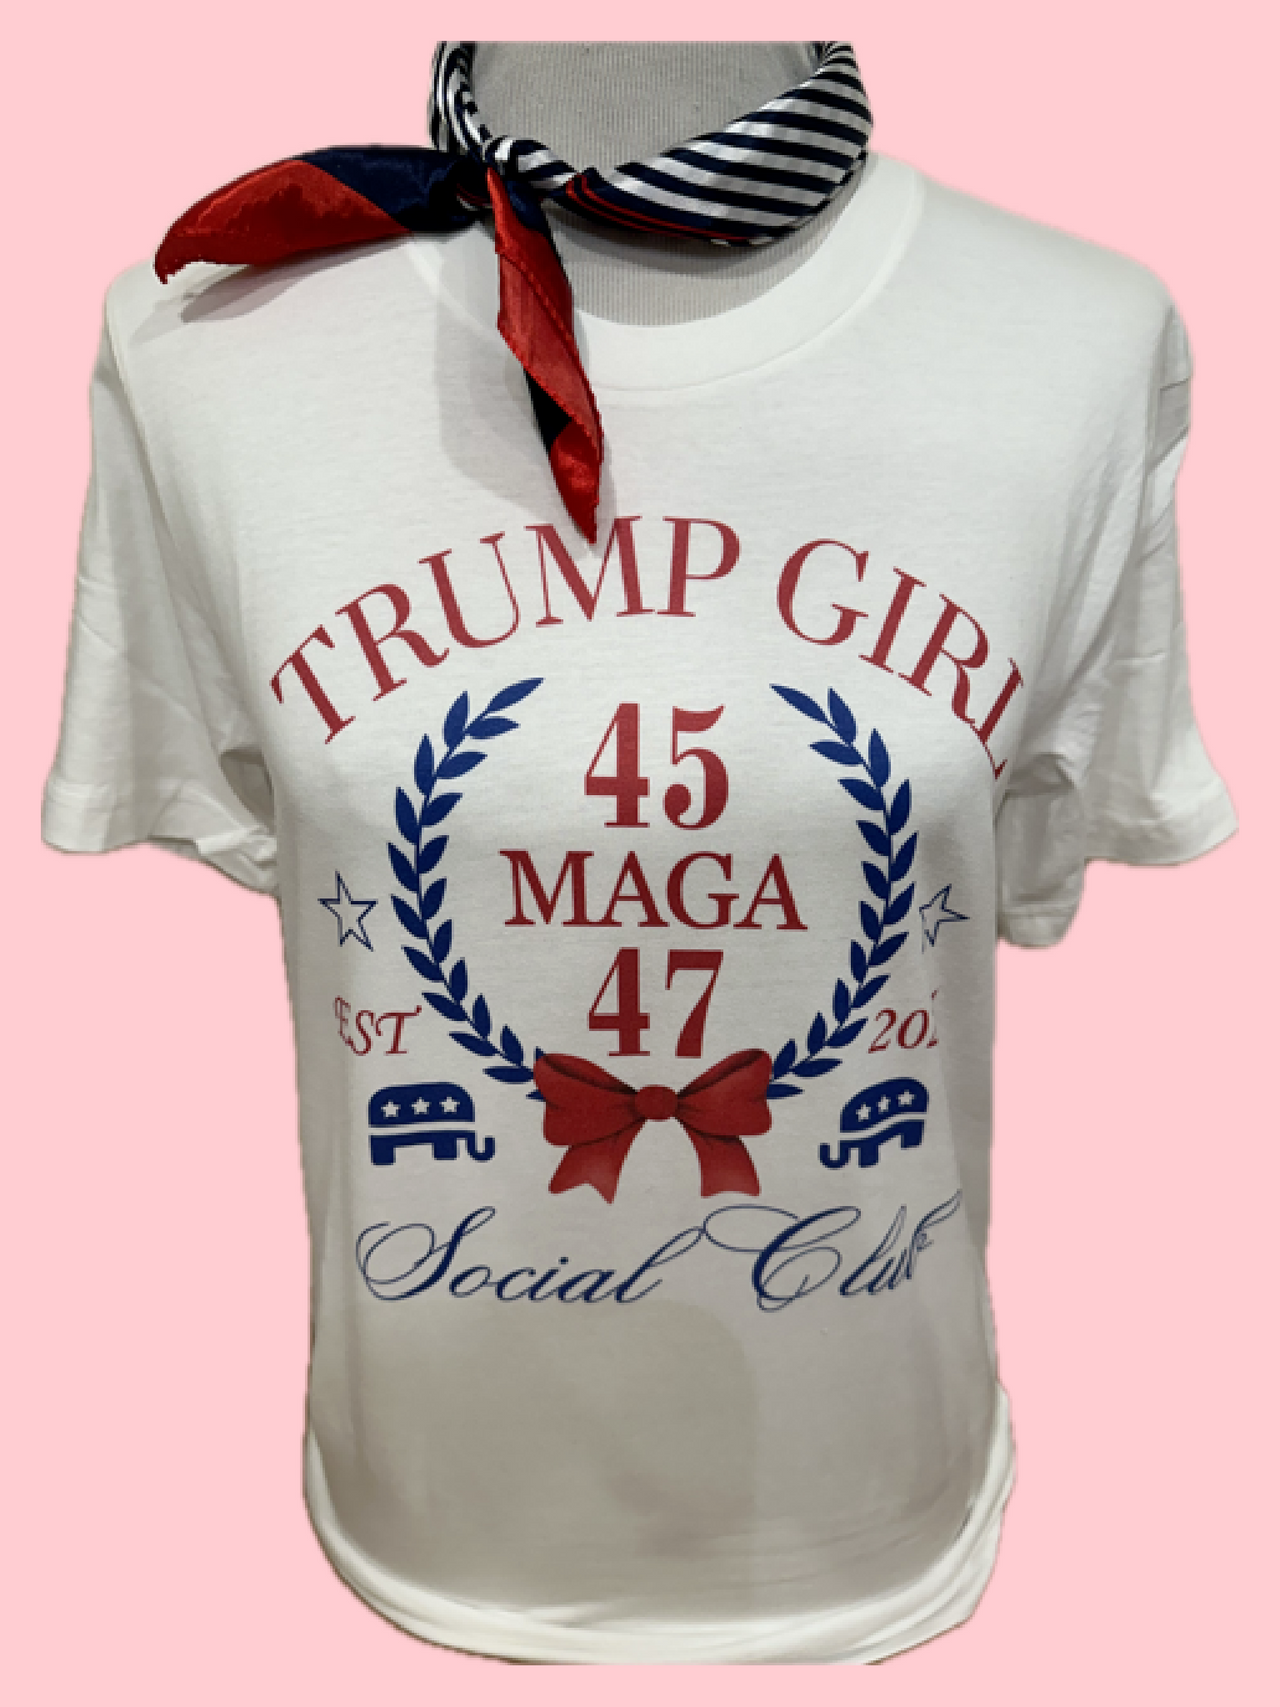 Trump Girl T shirt